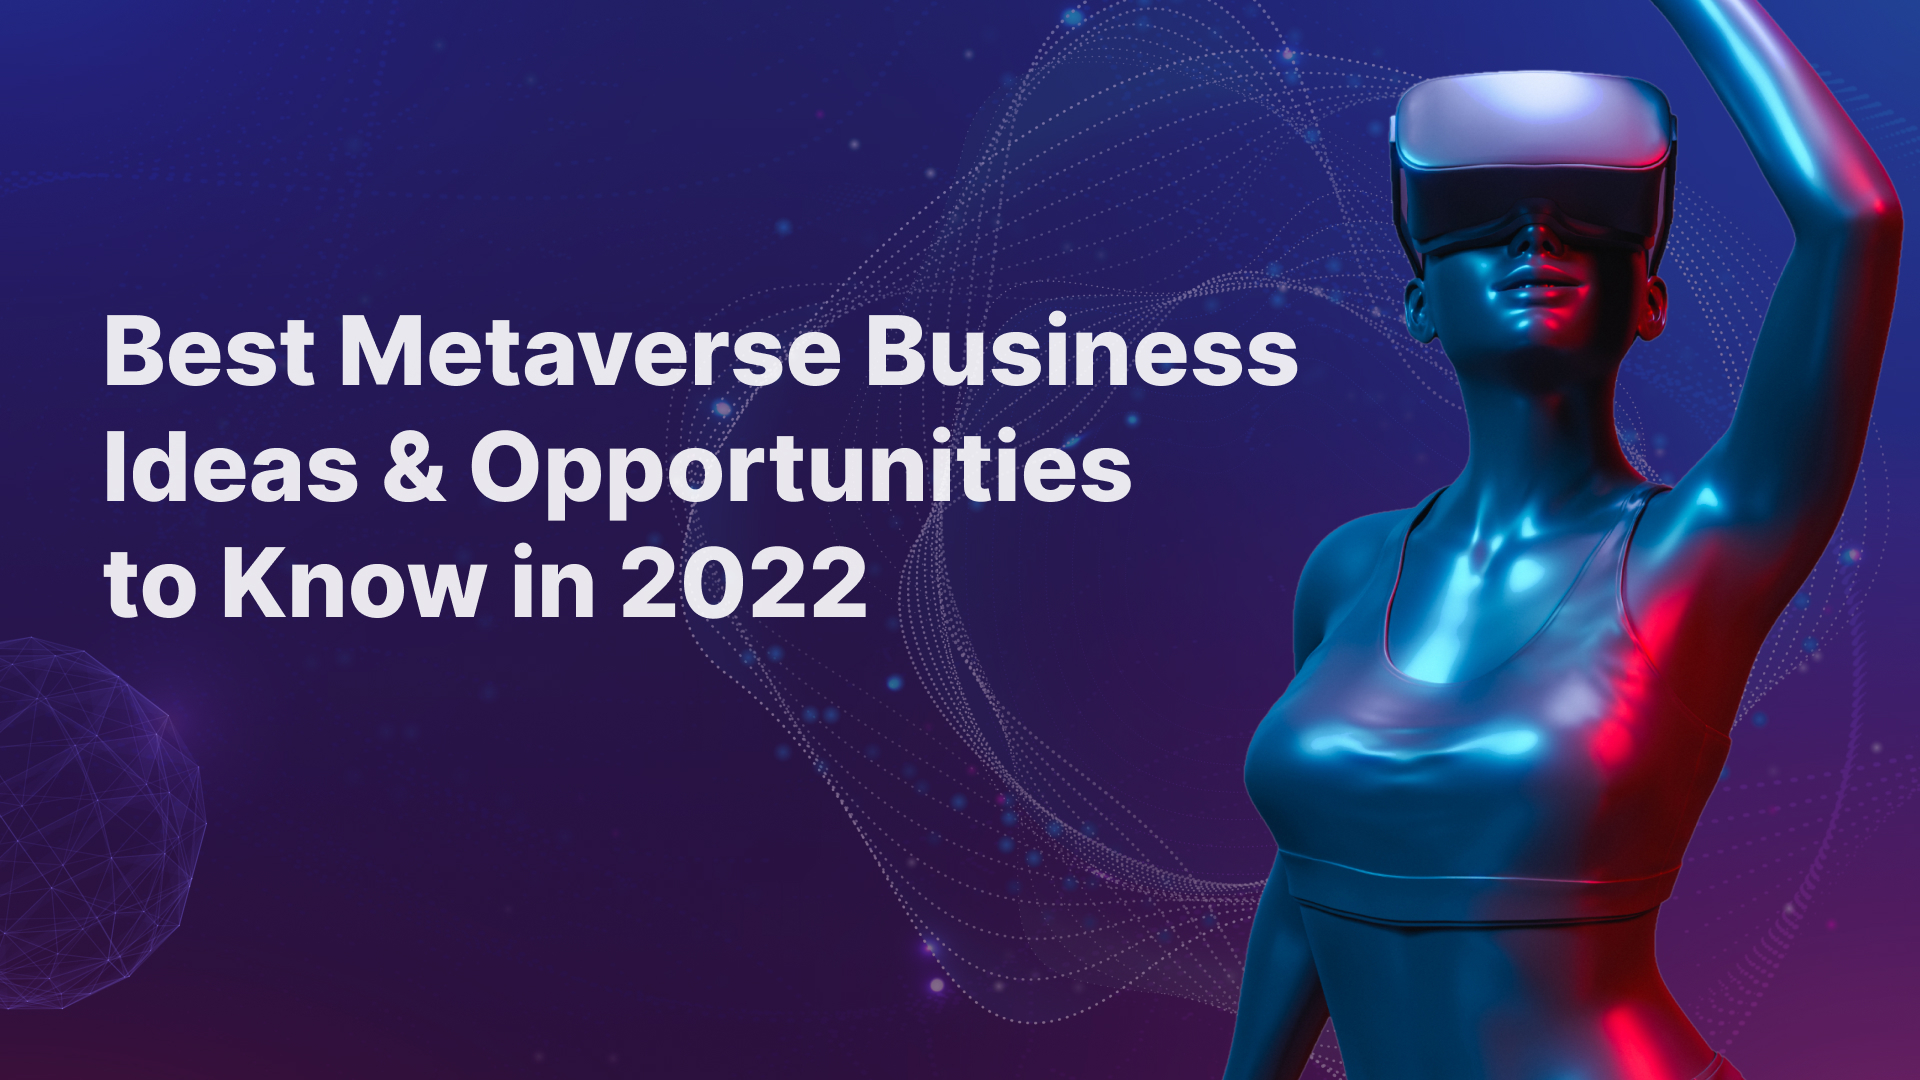 Best Metaverse Business Ideas & Opportunities in 2022